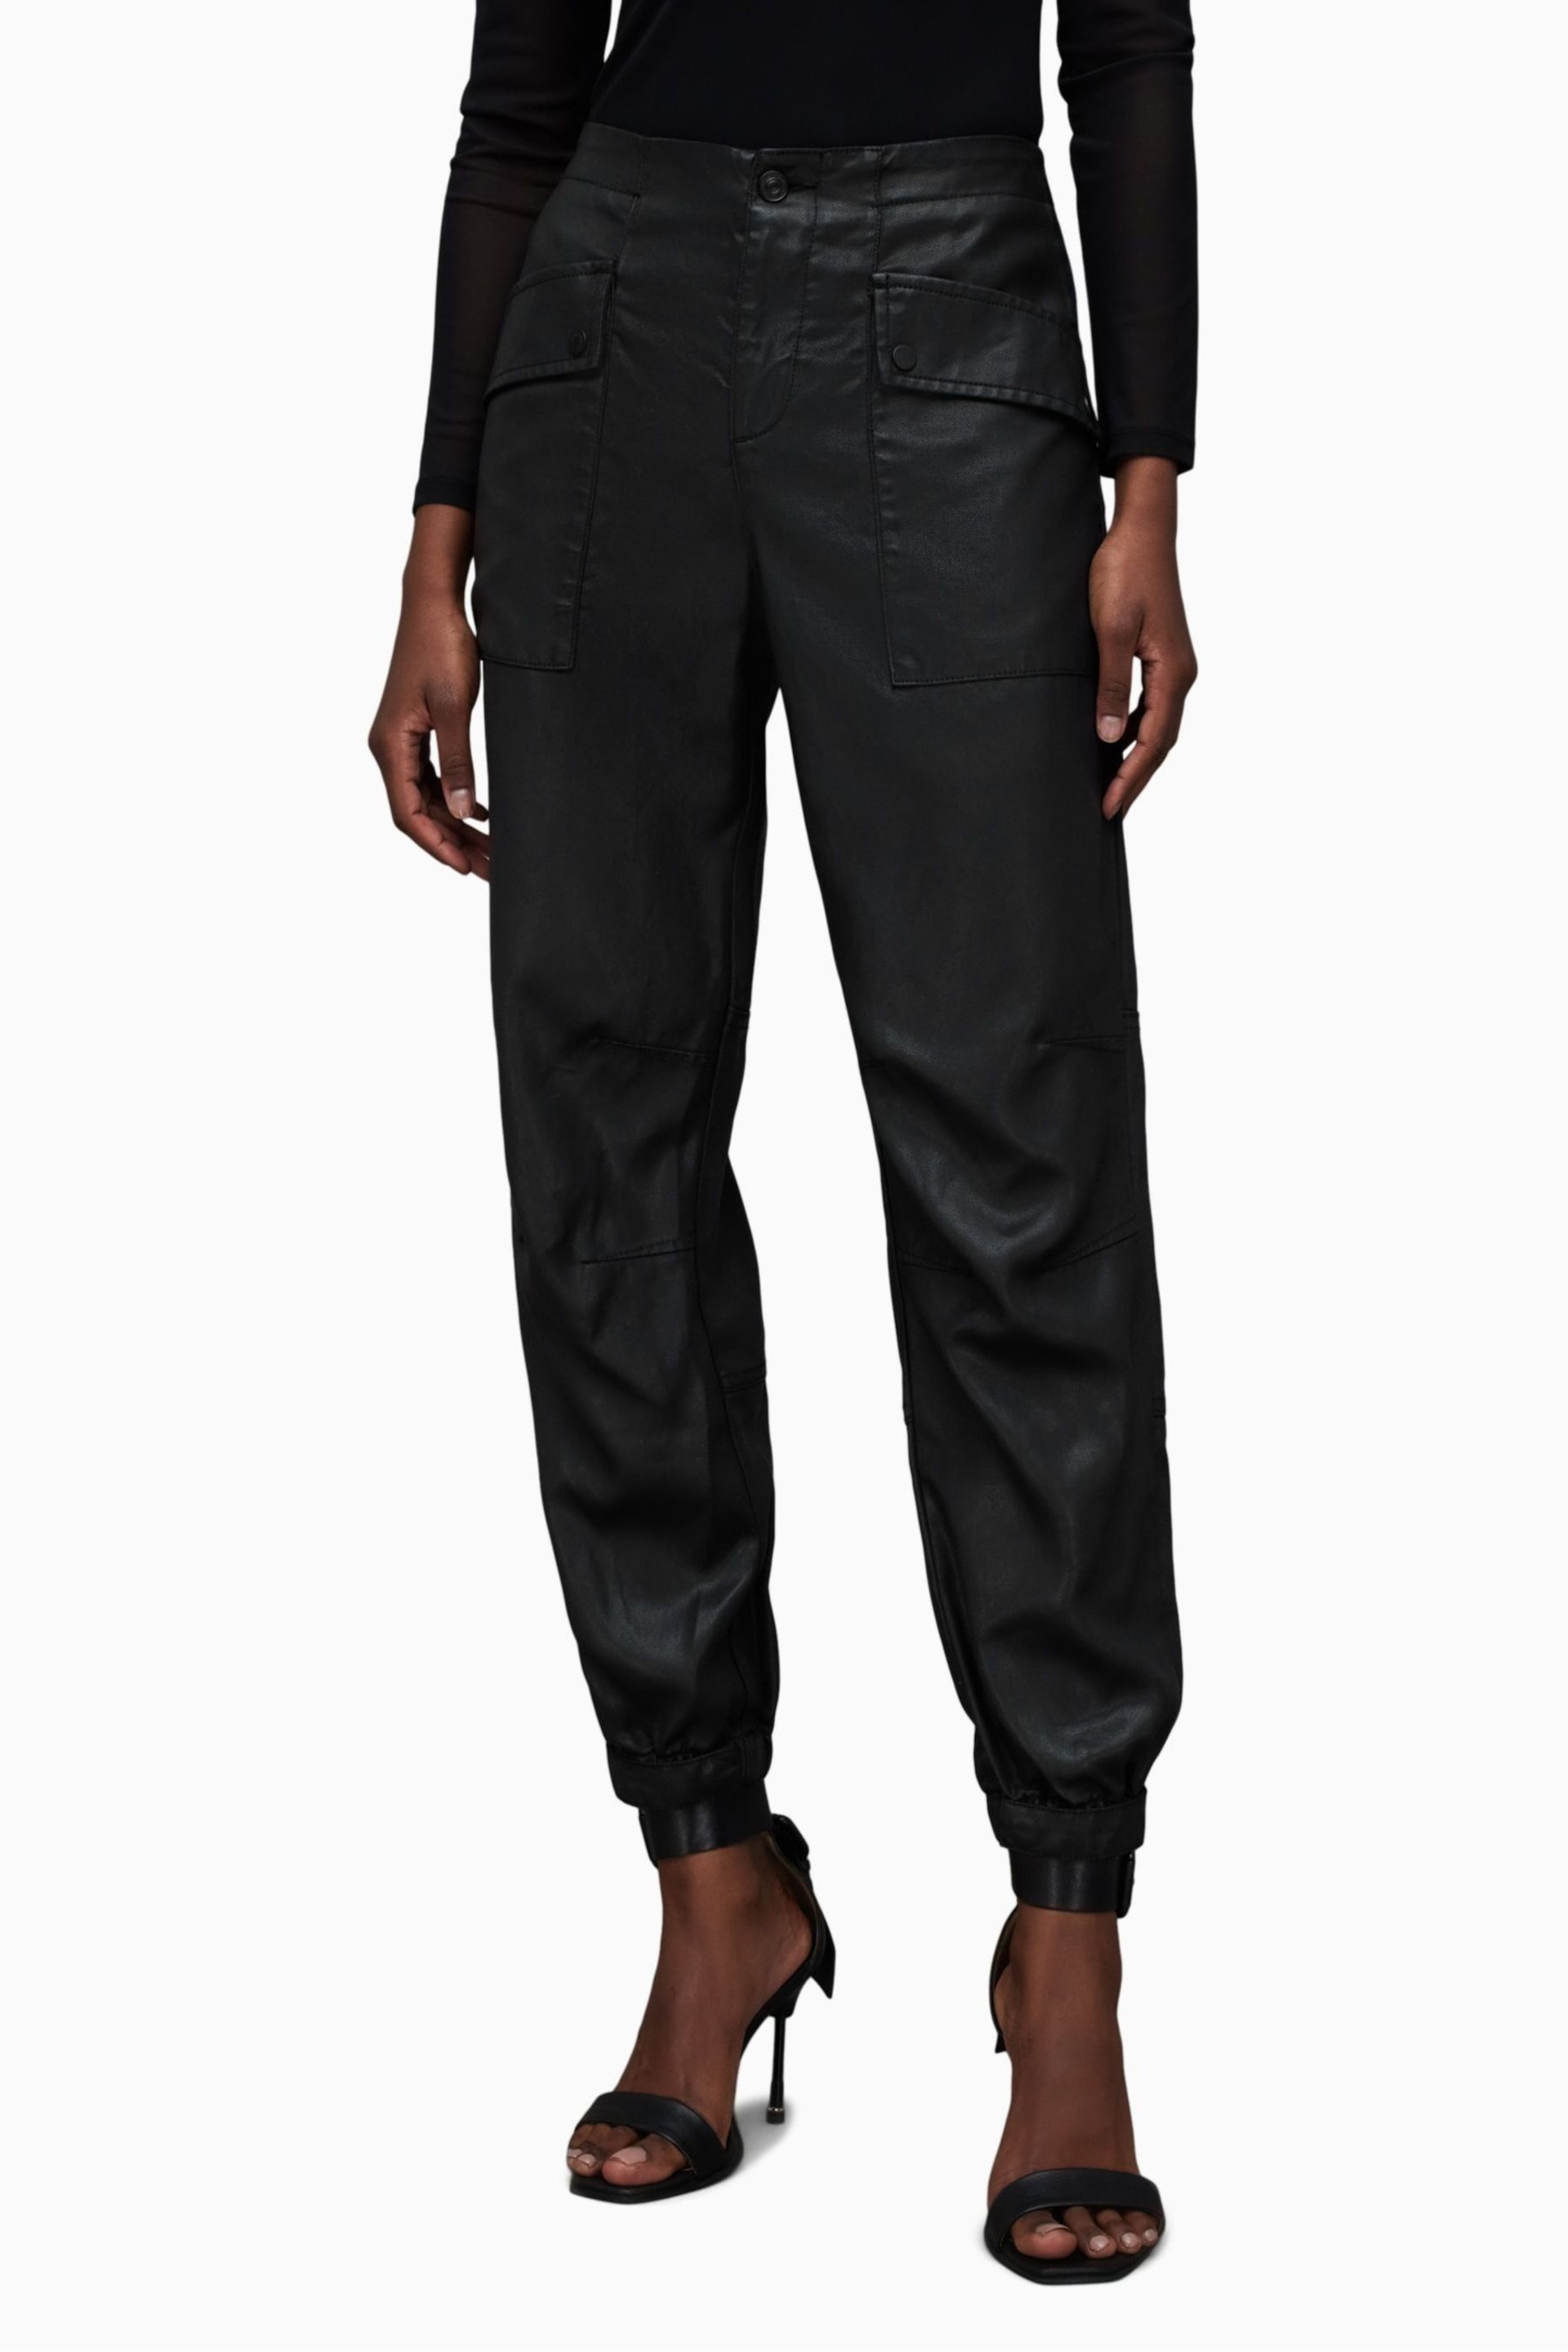 AllSaints Black Coated Frieda Trousers - Image 1 of 7